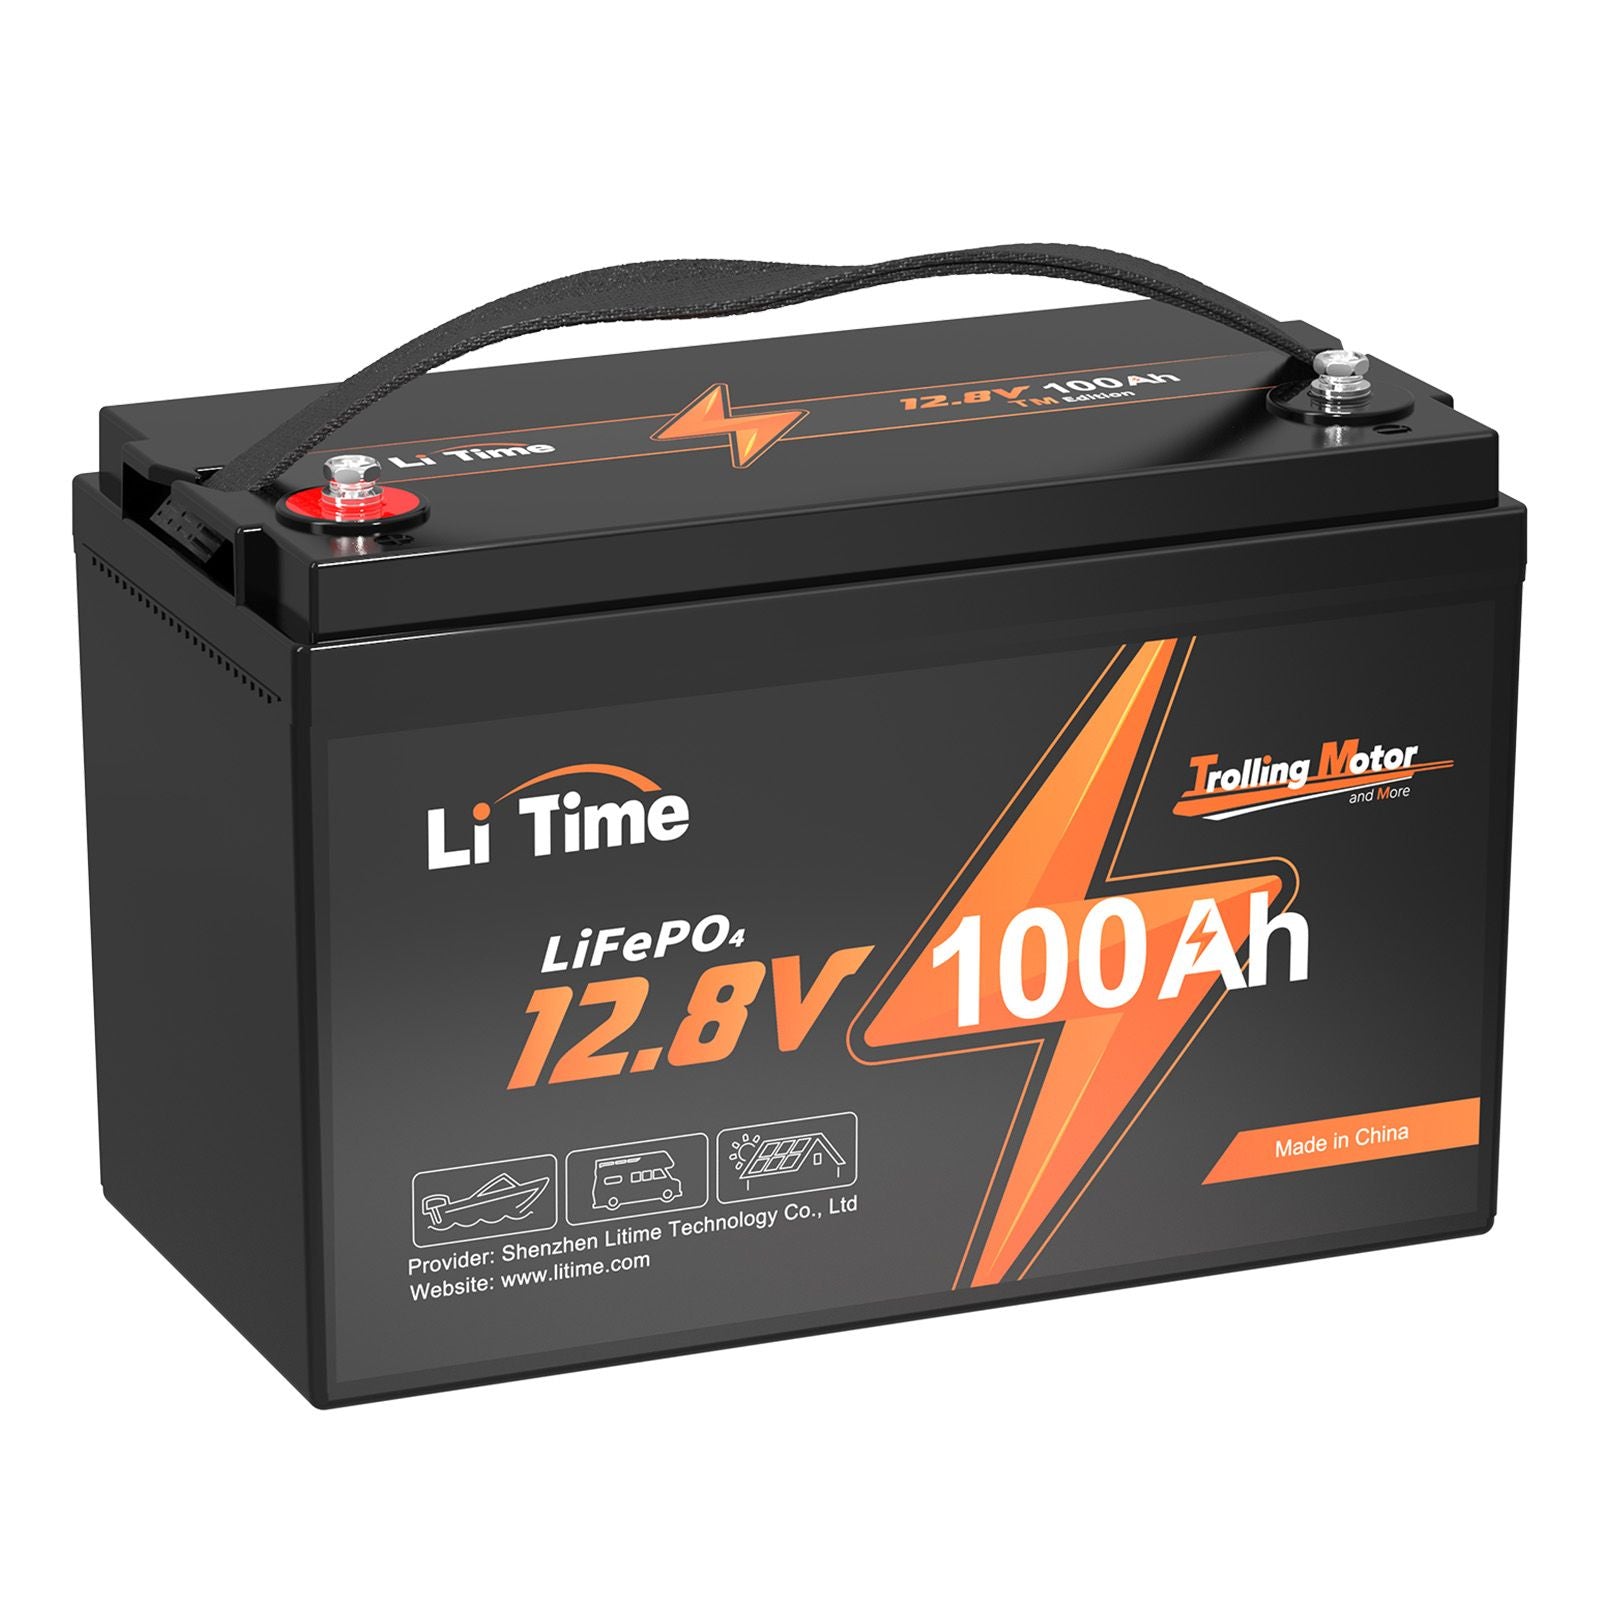 LiTime 12V 100Ah TM LiFePO4 バッテリー トローリングモーターにもっと適する